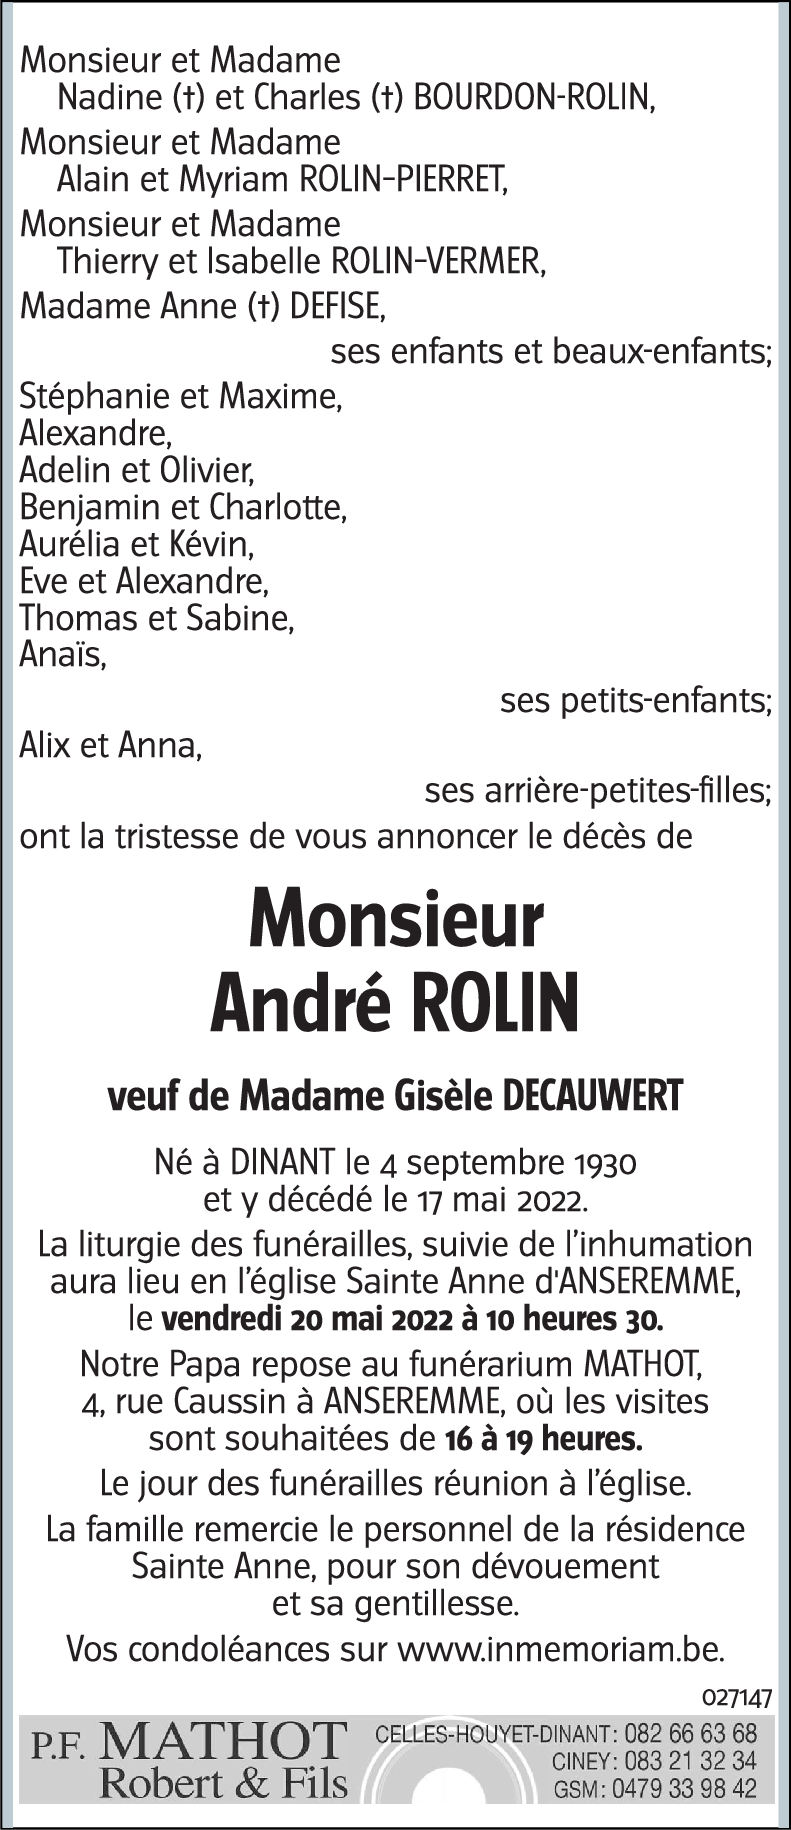 André ROLIN